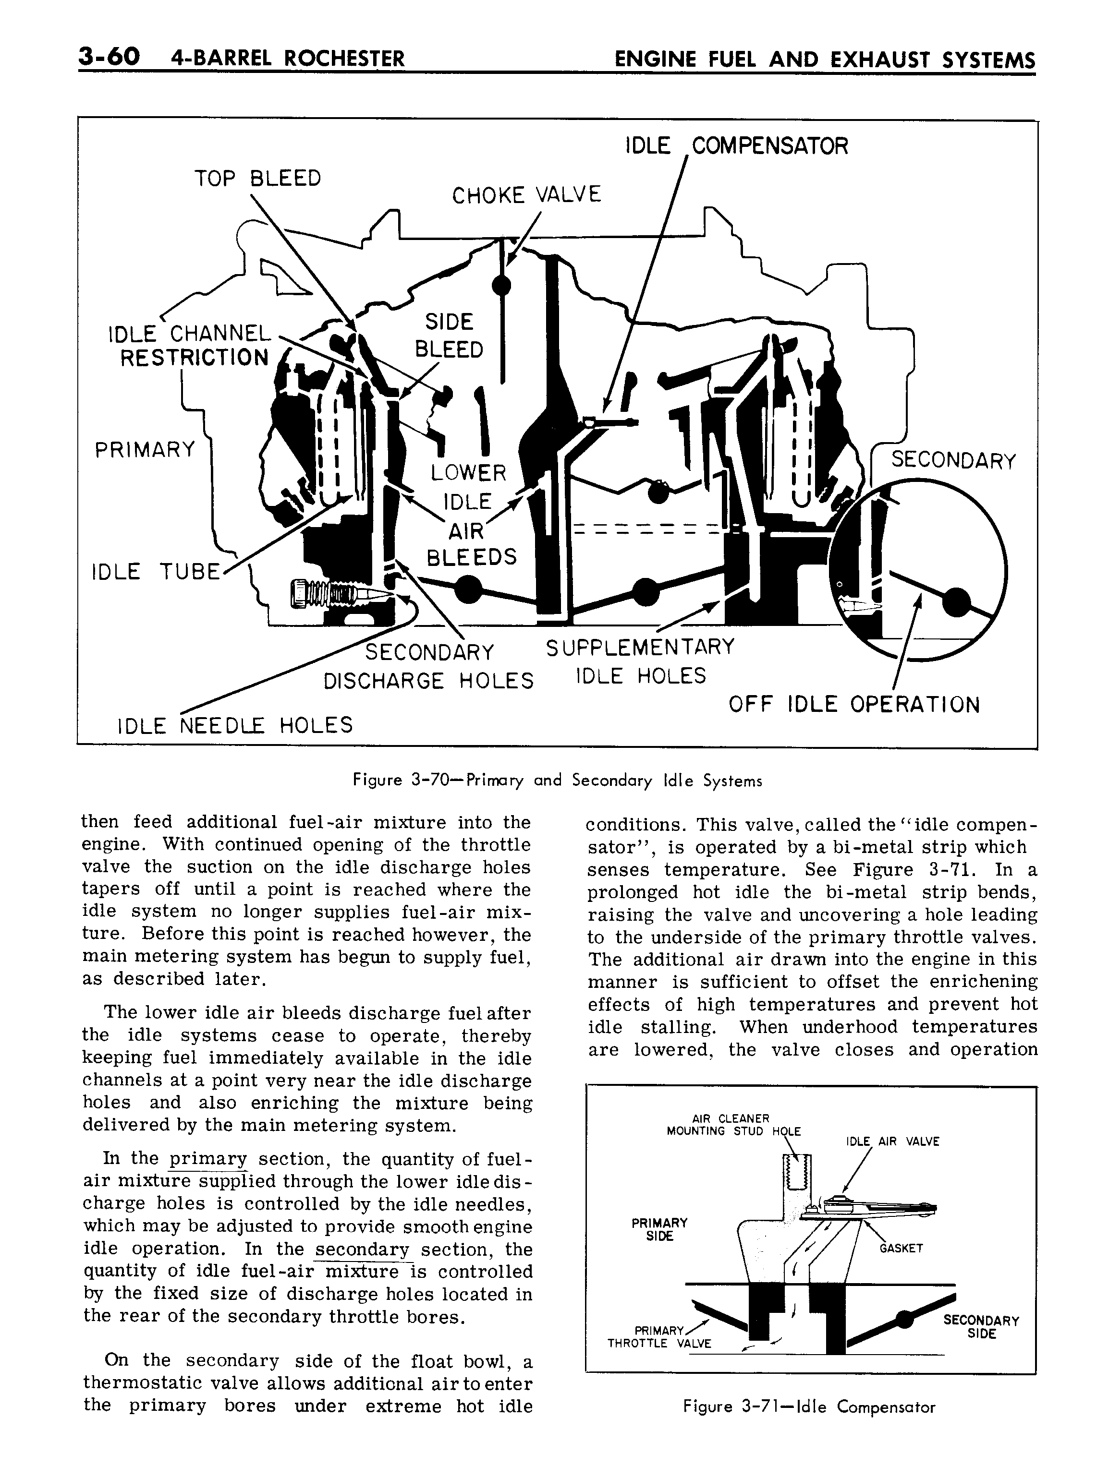 n_04 1961 Buick Shop Manual - Engine Fuel & Exhaust-060-060.jpg